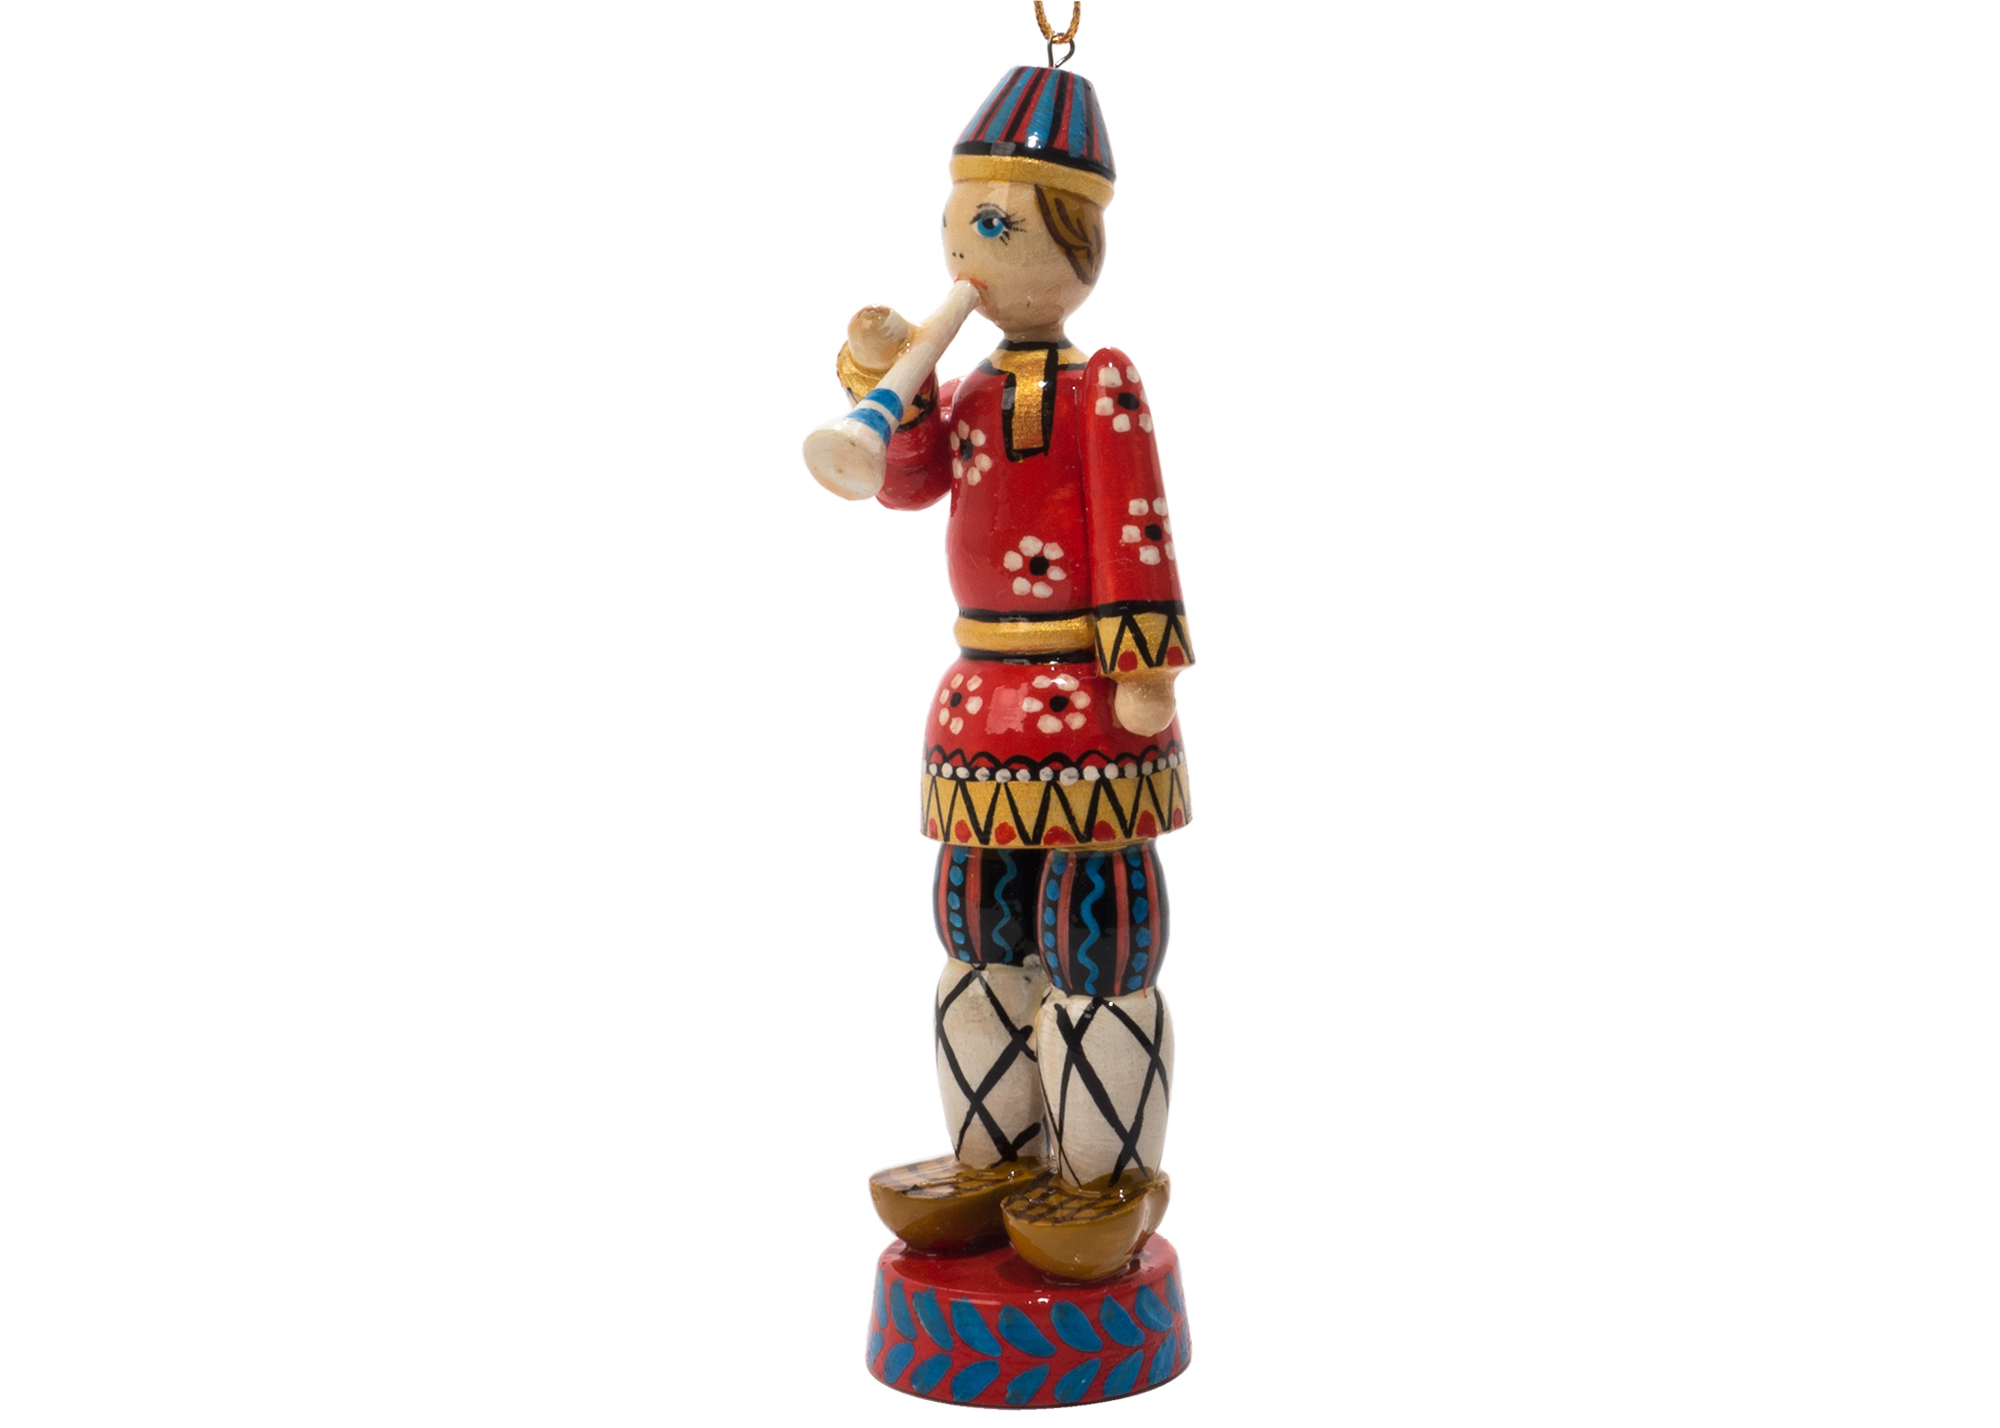 Buy Russian Folk Rozhok Player Ornament 5" at GoldenCockerel.com